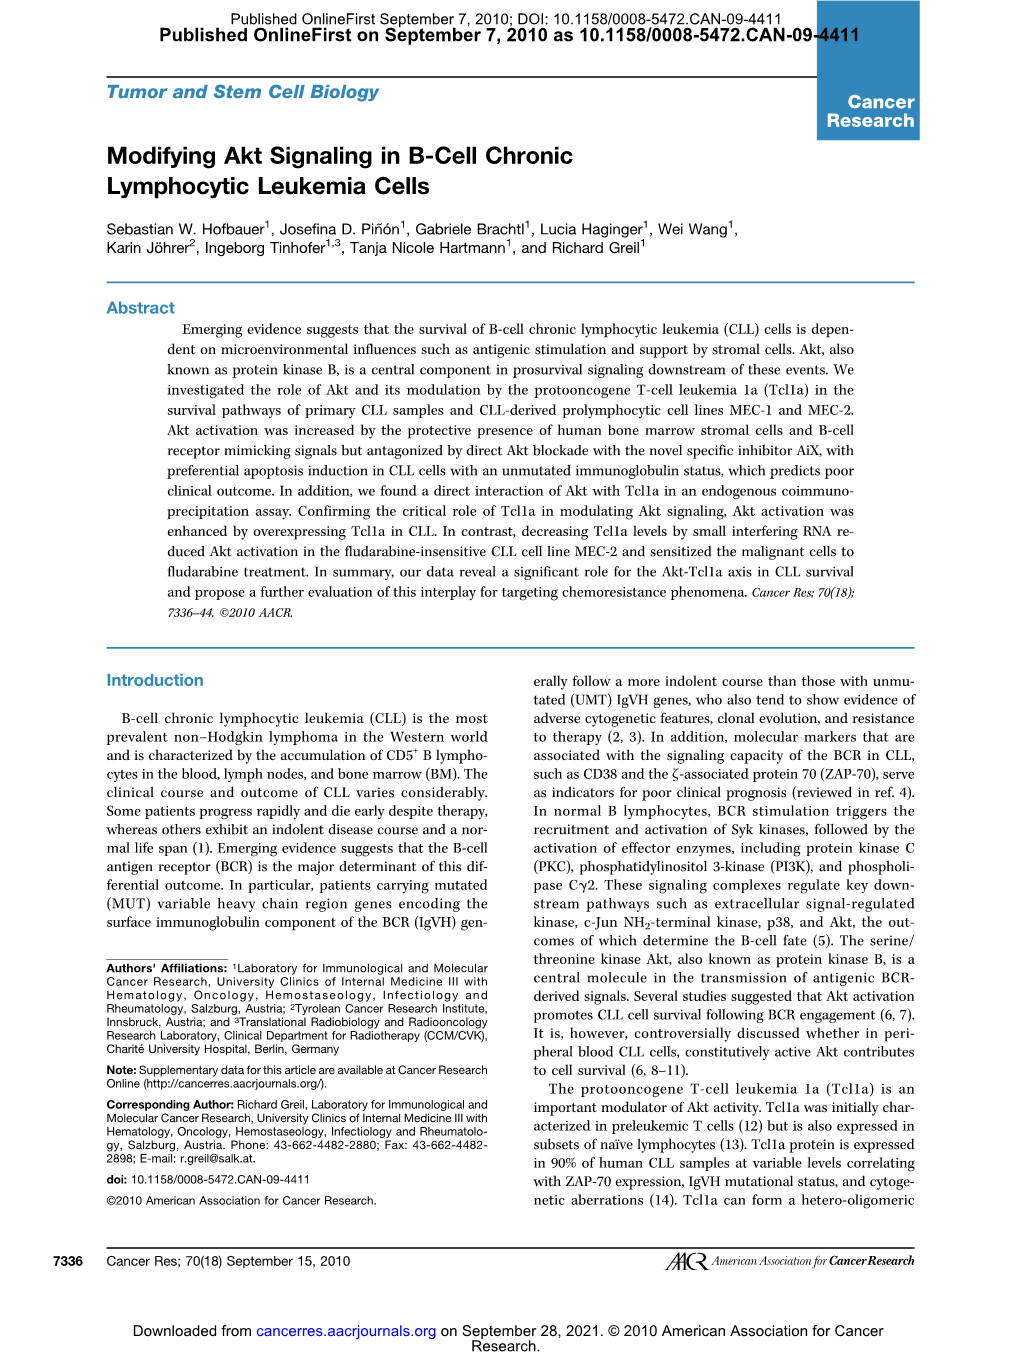 Modifying Akt Signaling in B-Cell Chronic Lymphocytic Leukemia Cells